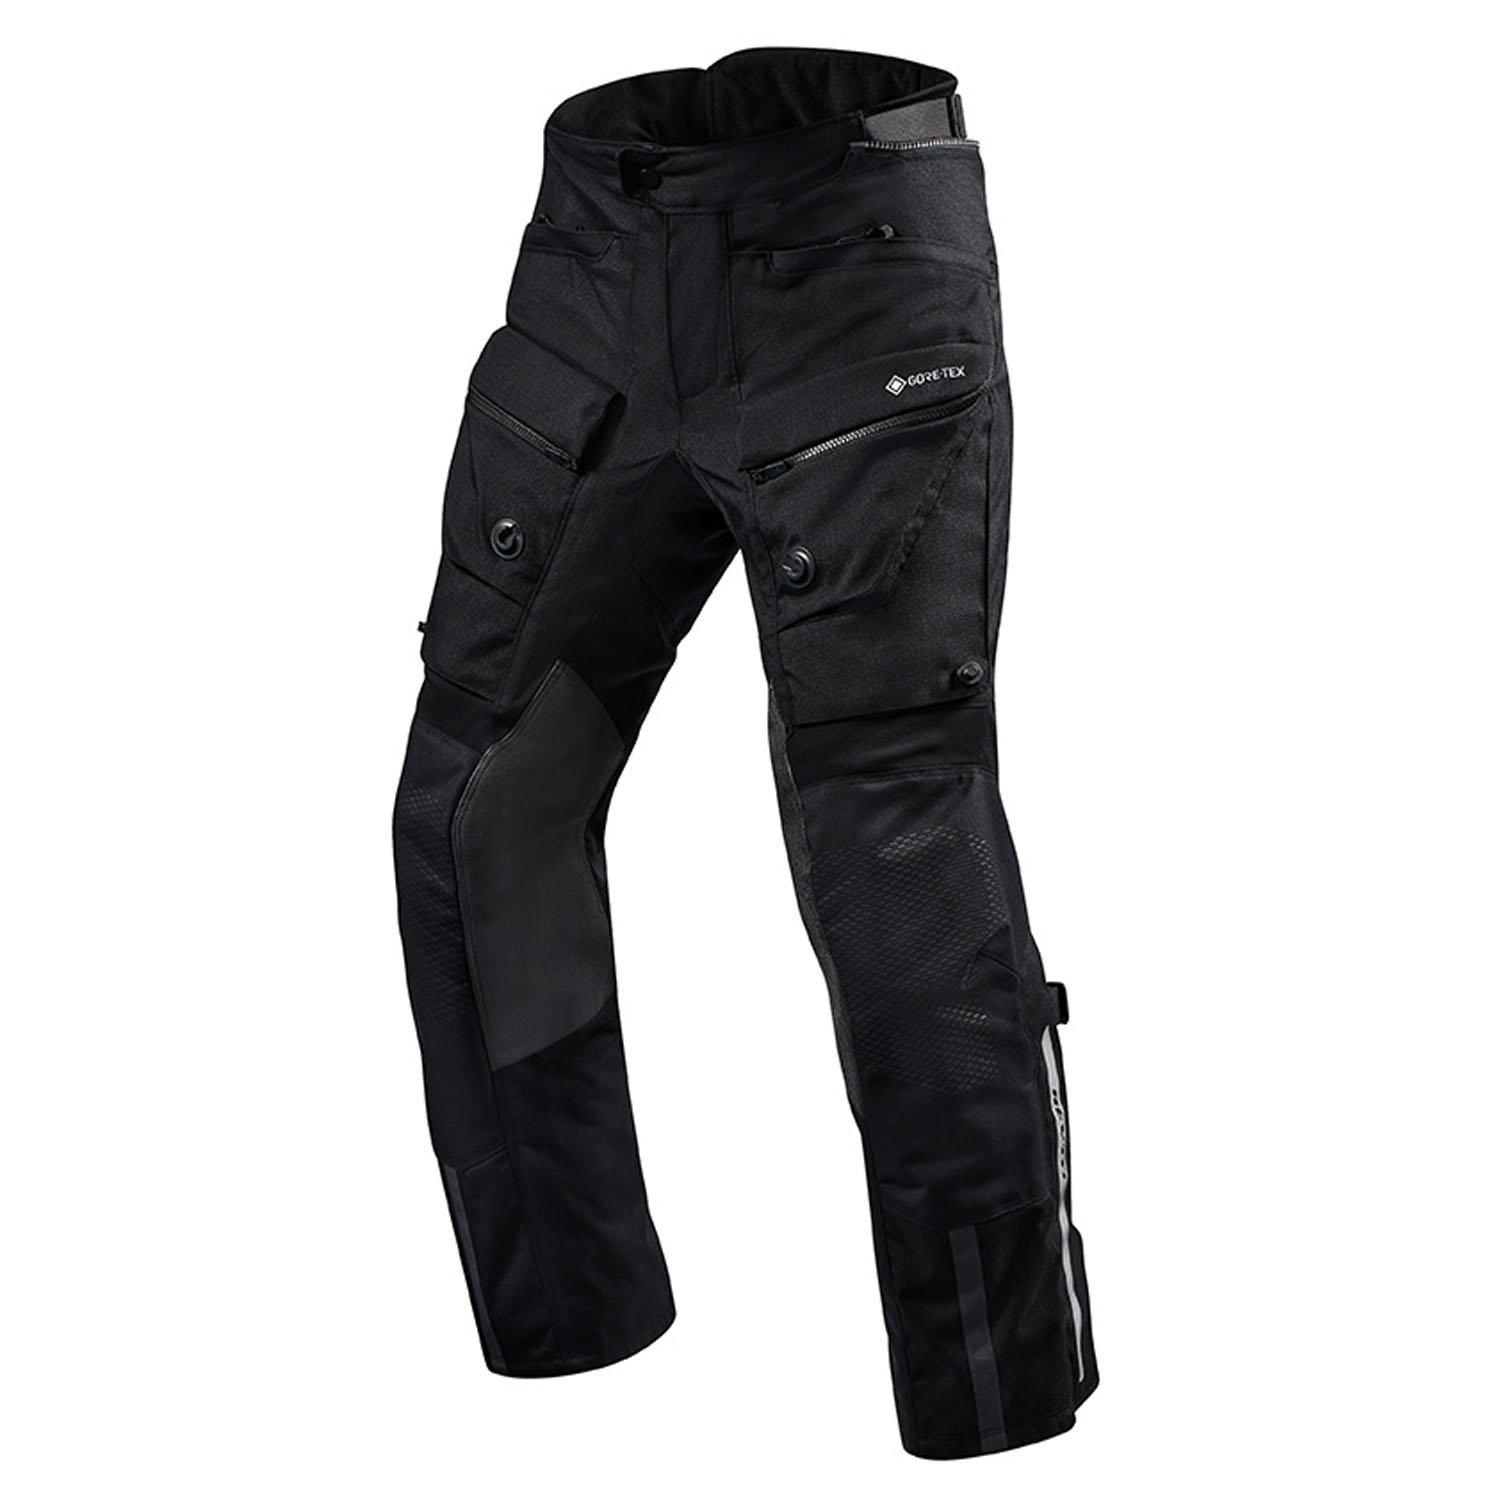 Image of REV'IT! Trousers Defender 3 GTX Black Long Motorcycle Pants Talla XL